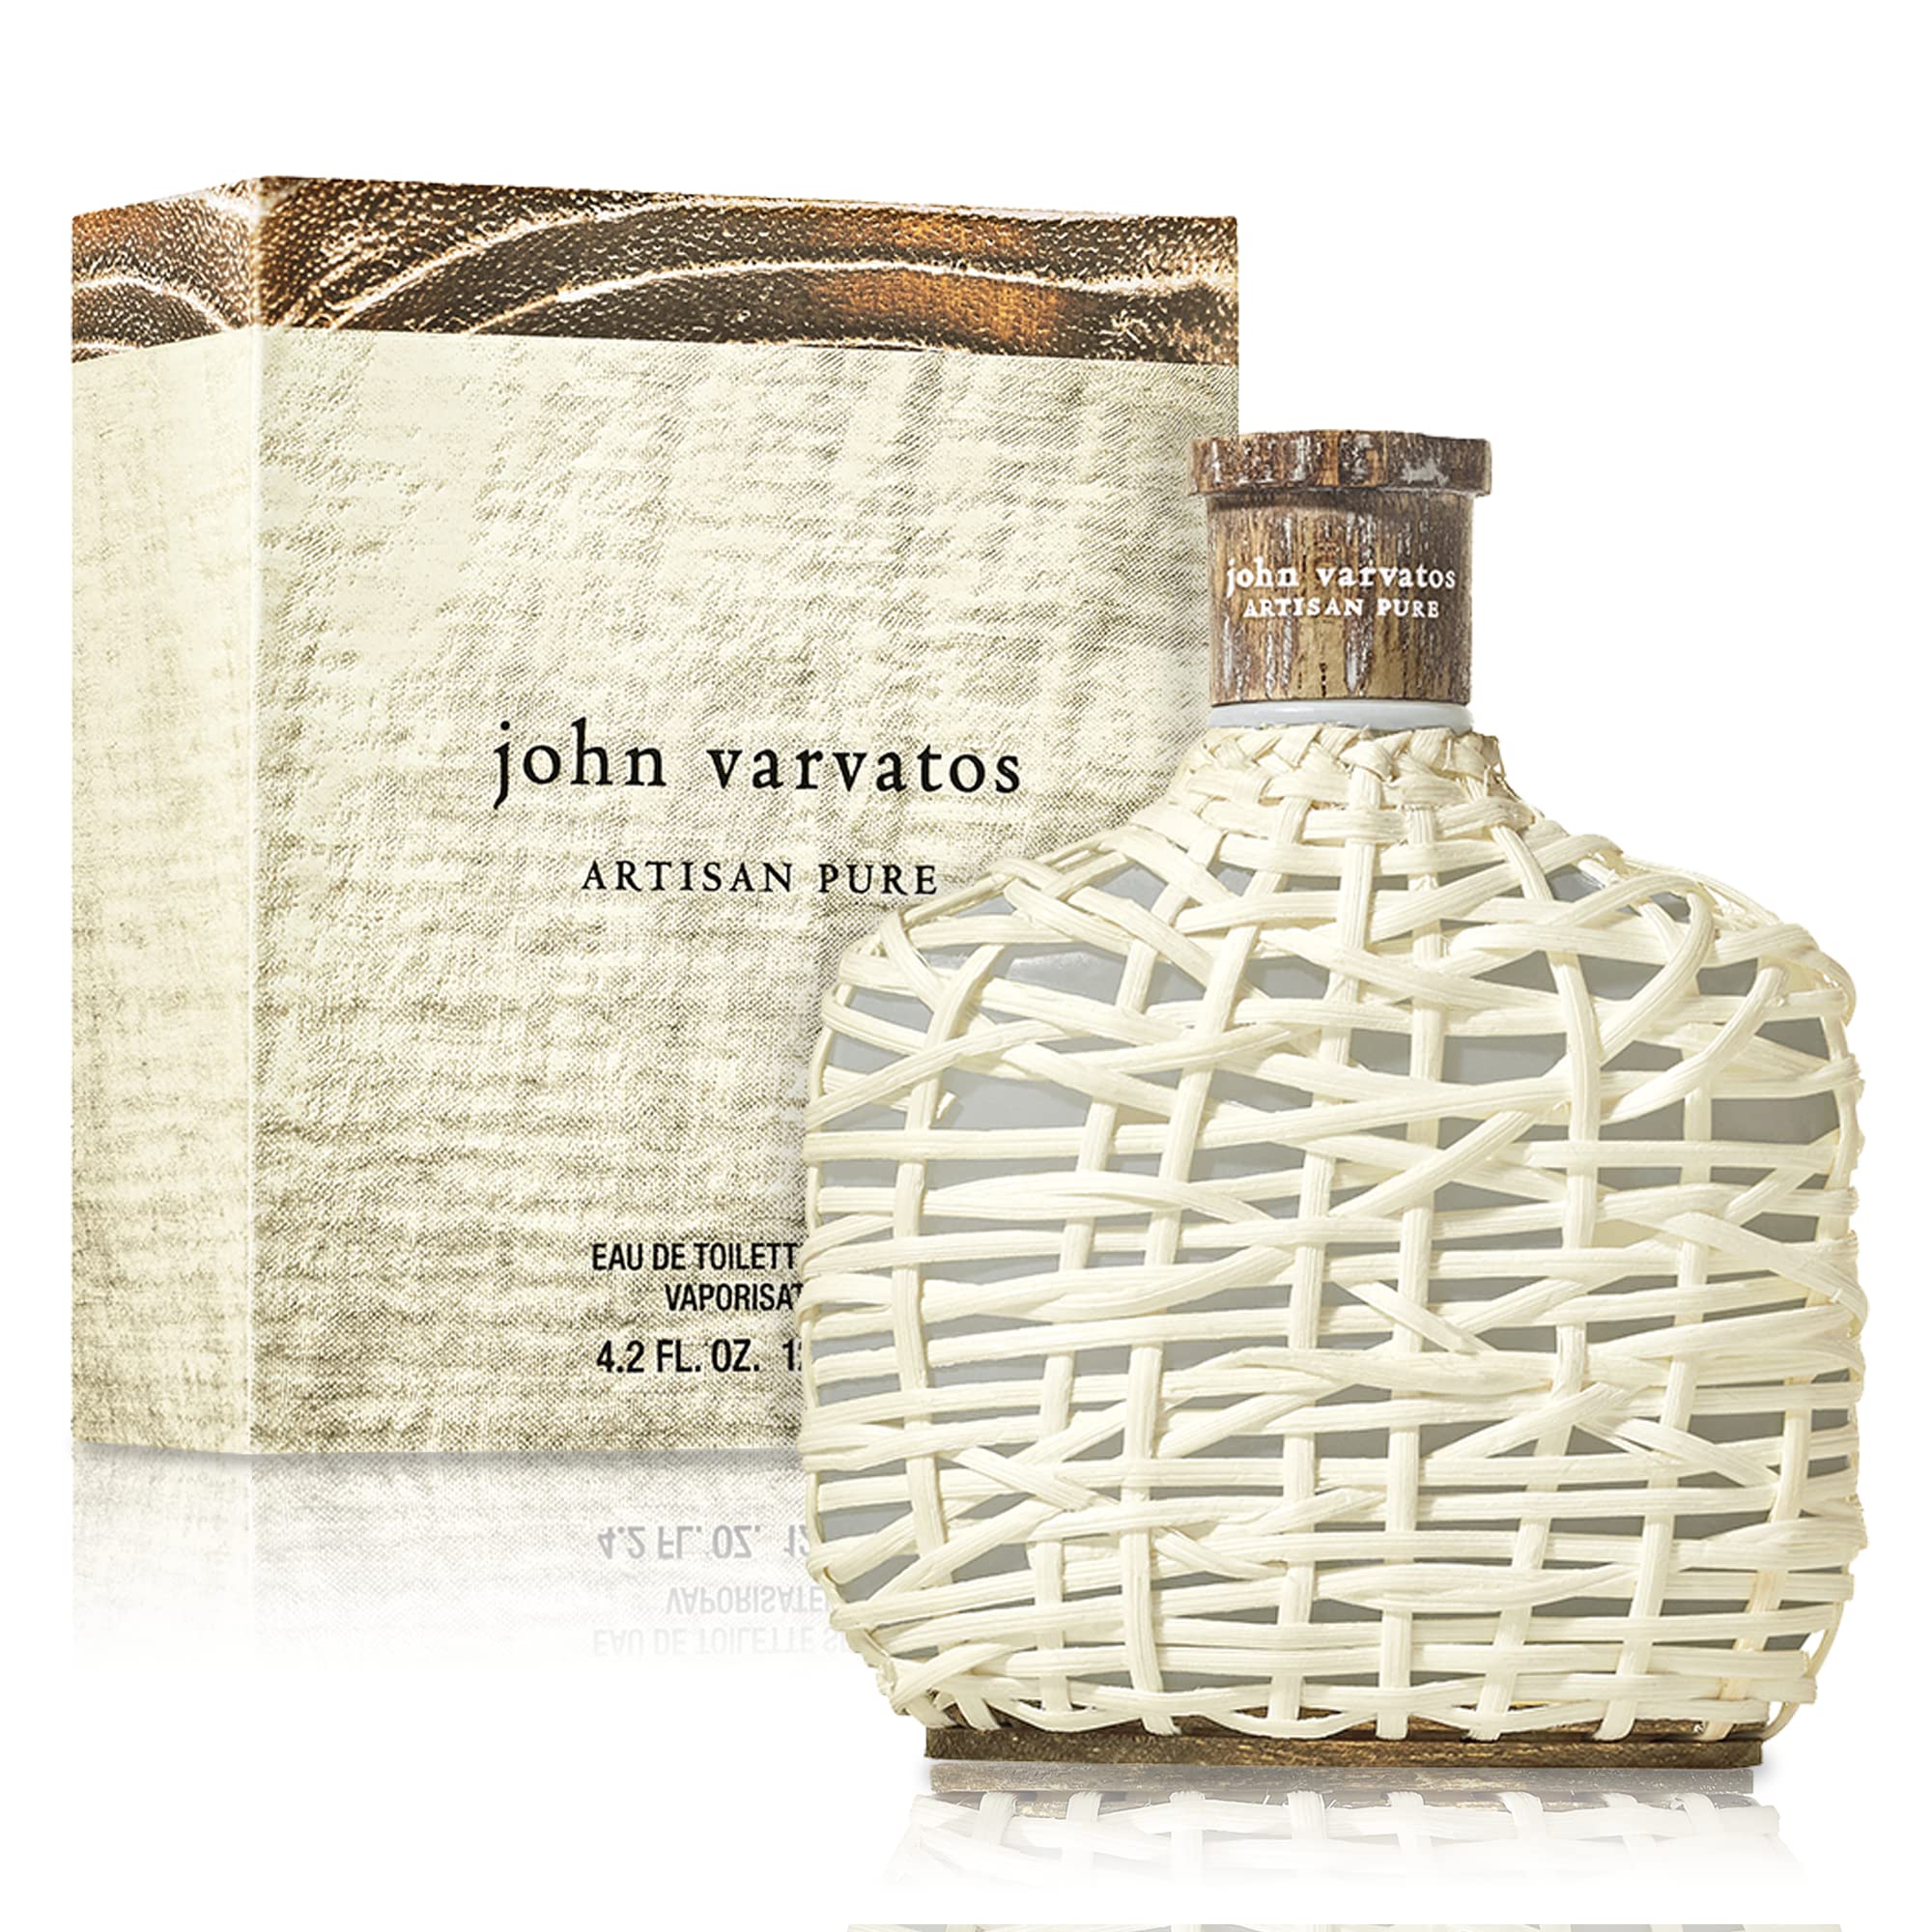 John Varvatos Artisan Pure EDT 100ml Perfume For Men